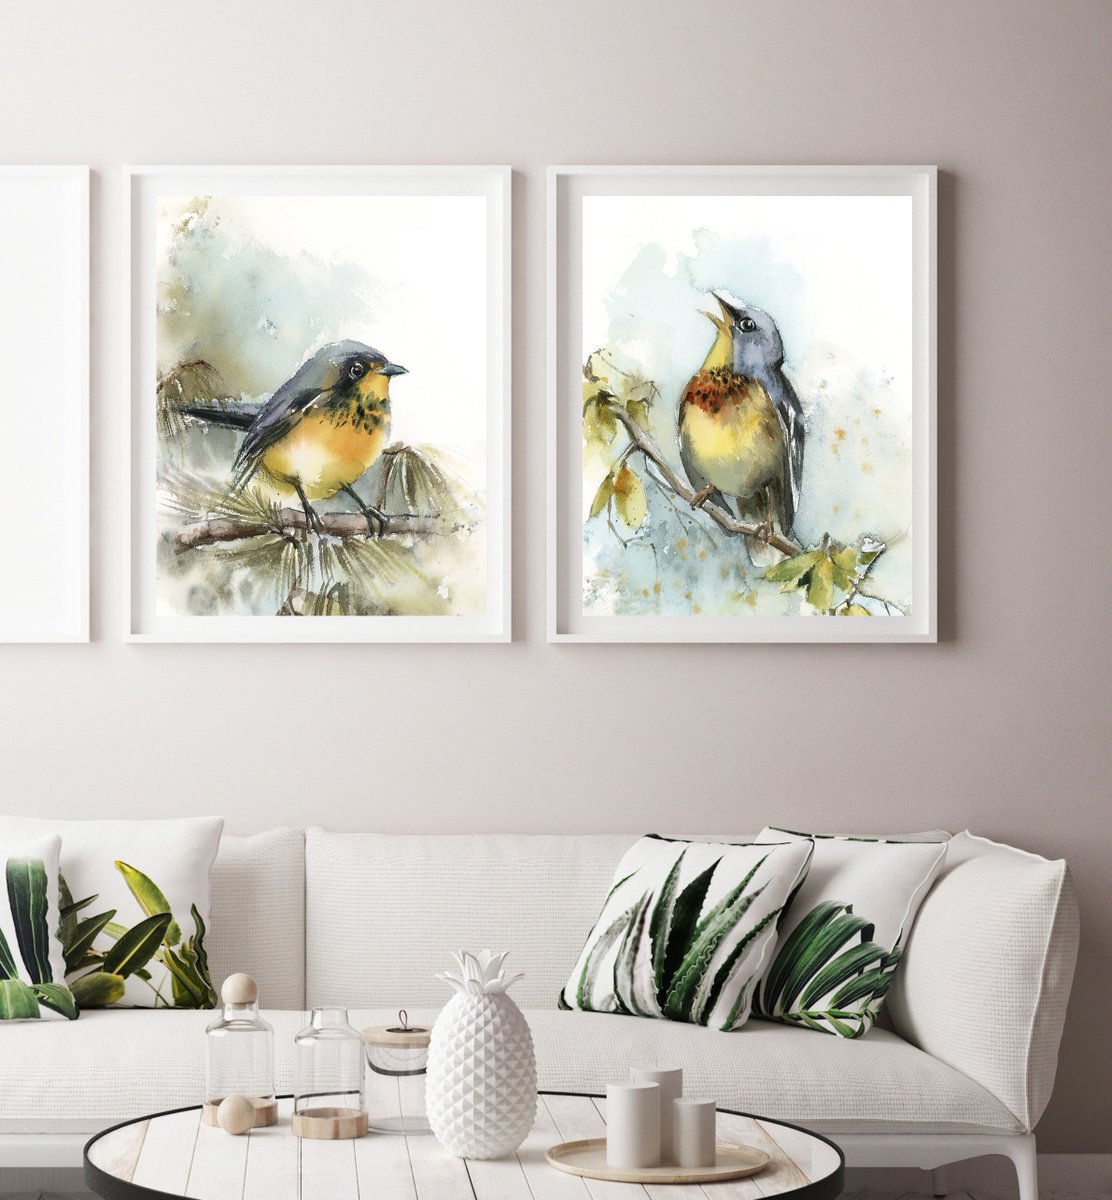 Bird art prints set, set of 2 bird fine art prints, bird art, bird watercolor prints, green yellow bird painting art, bird wall art prints #BirdArtPrint #SetOfPrints 
$28.00
➤ tinyurl.com/y6z2d5qj